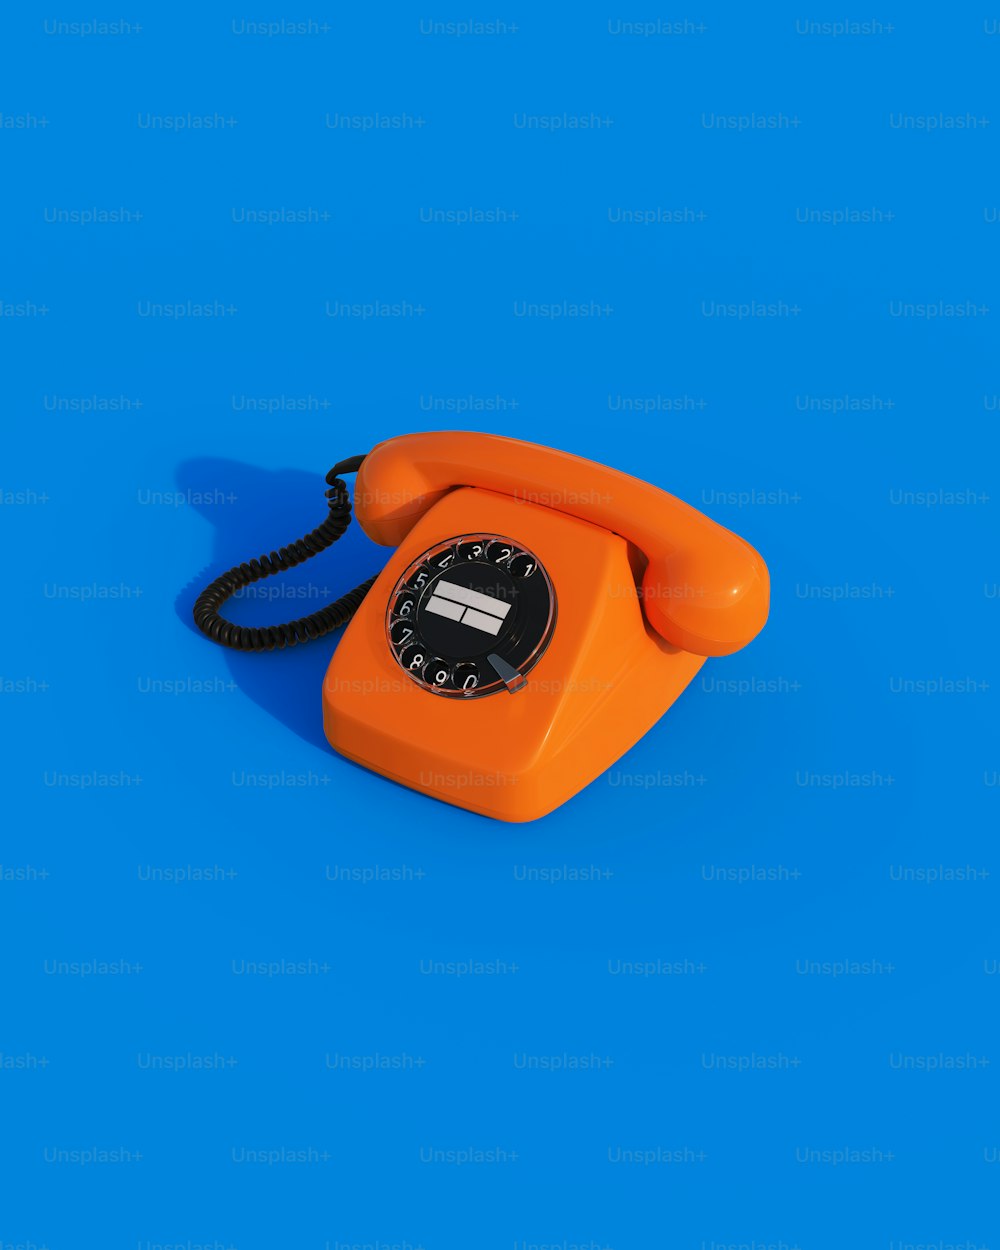 um telefone laranja em um fundo azul